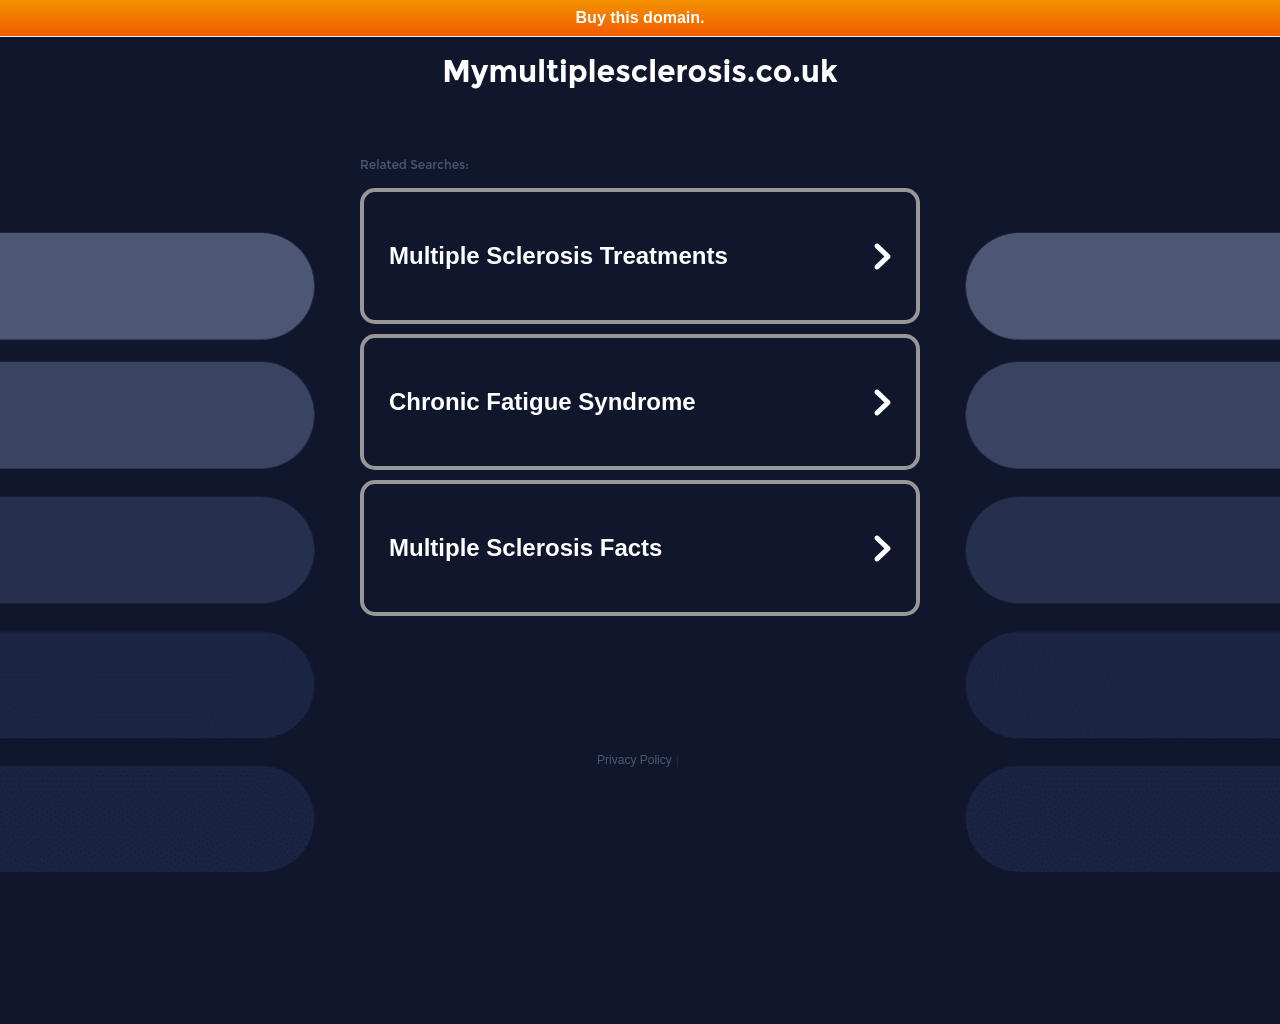 mymultiplesclerosis.co.uk